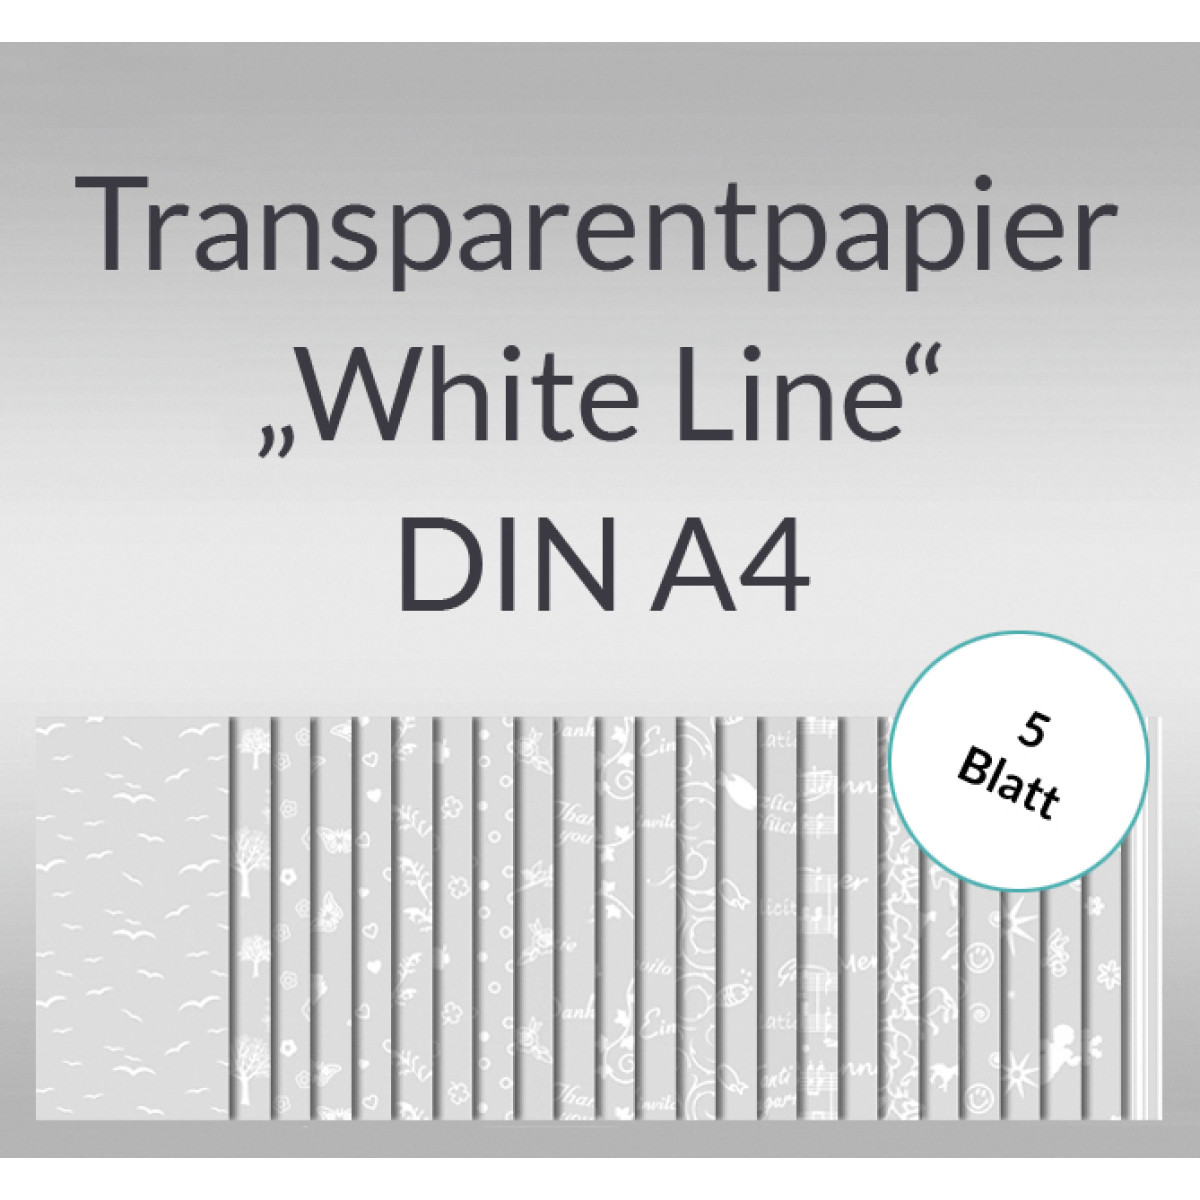 Transparentpapier "White Line" DIN A4 - 5 Blatt